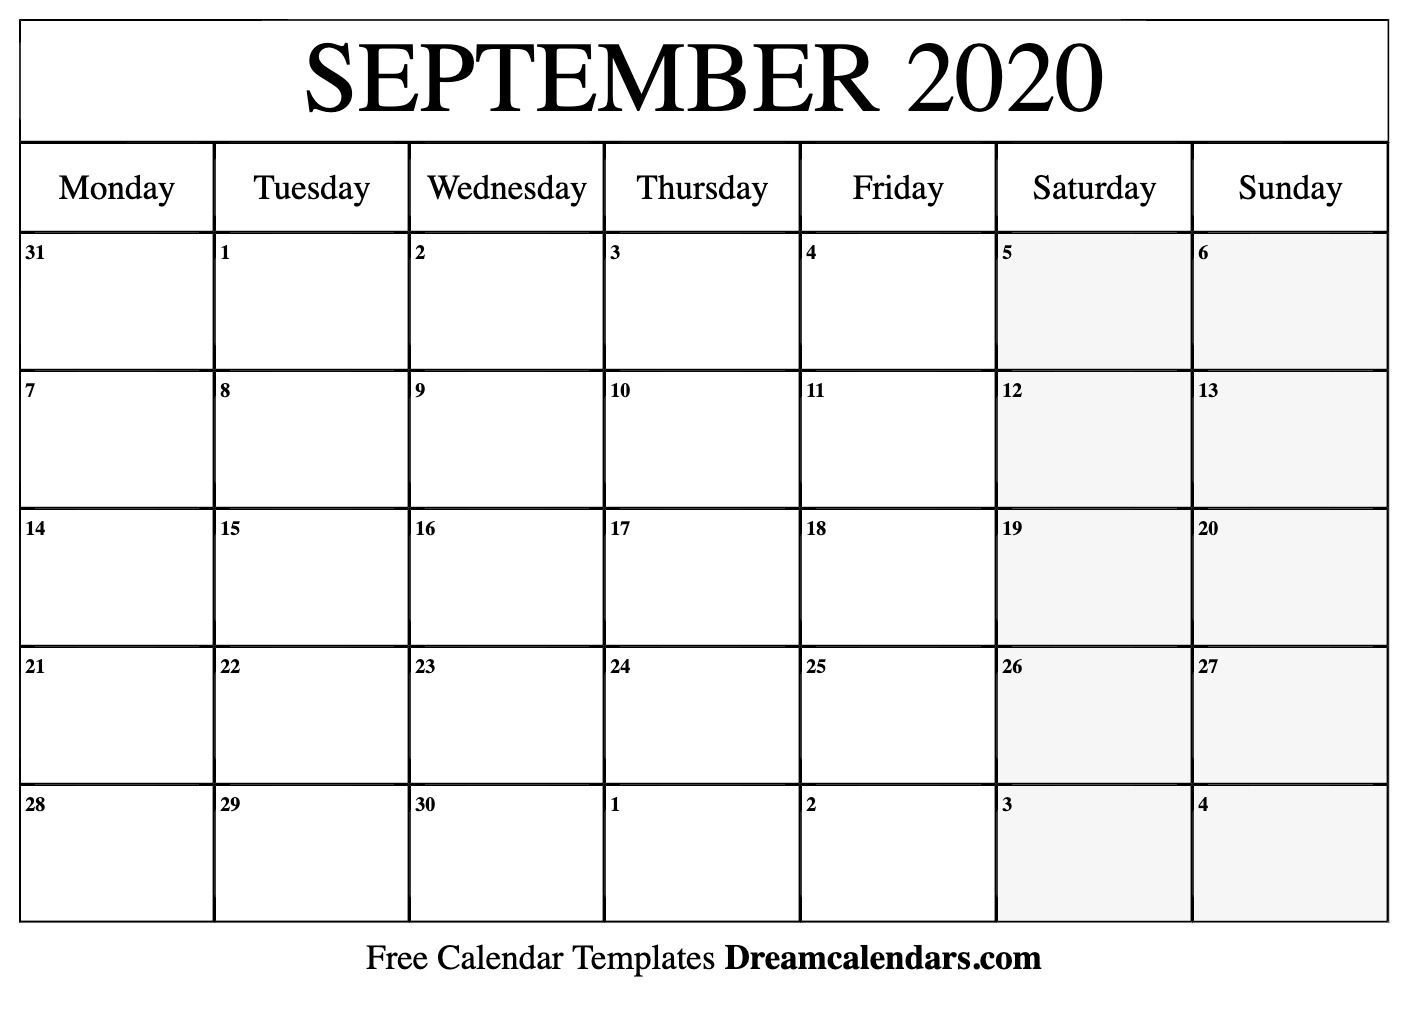 September 2020 Calendar Printable (monday) Dream Calendars